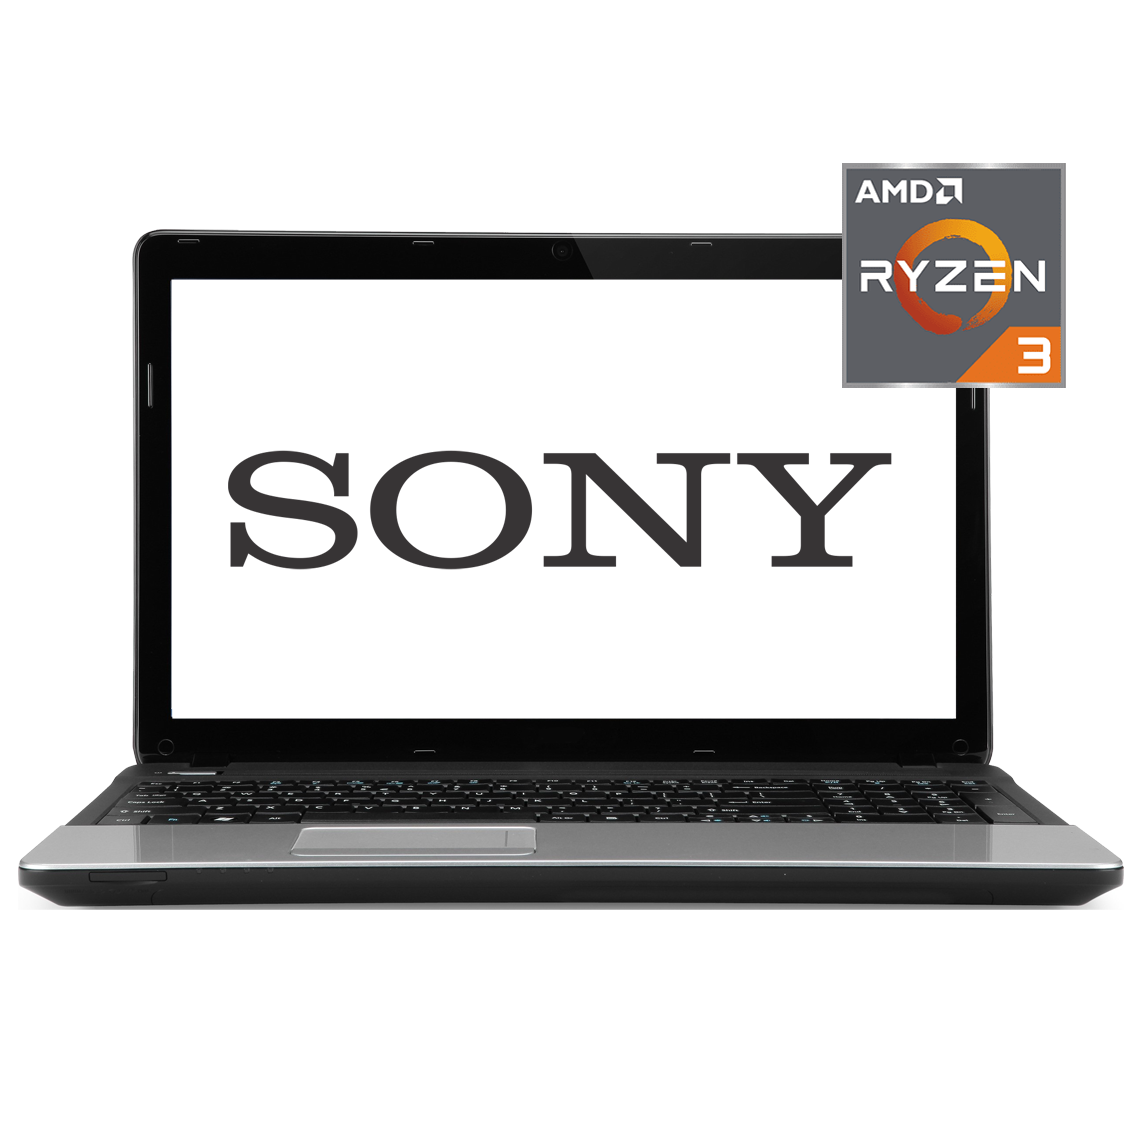 Sony - 16 inch AMD Ryzen 3